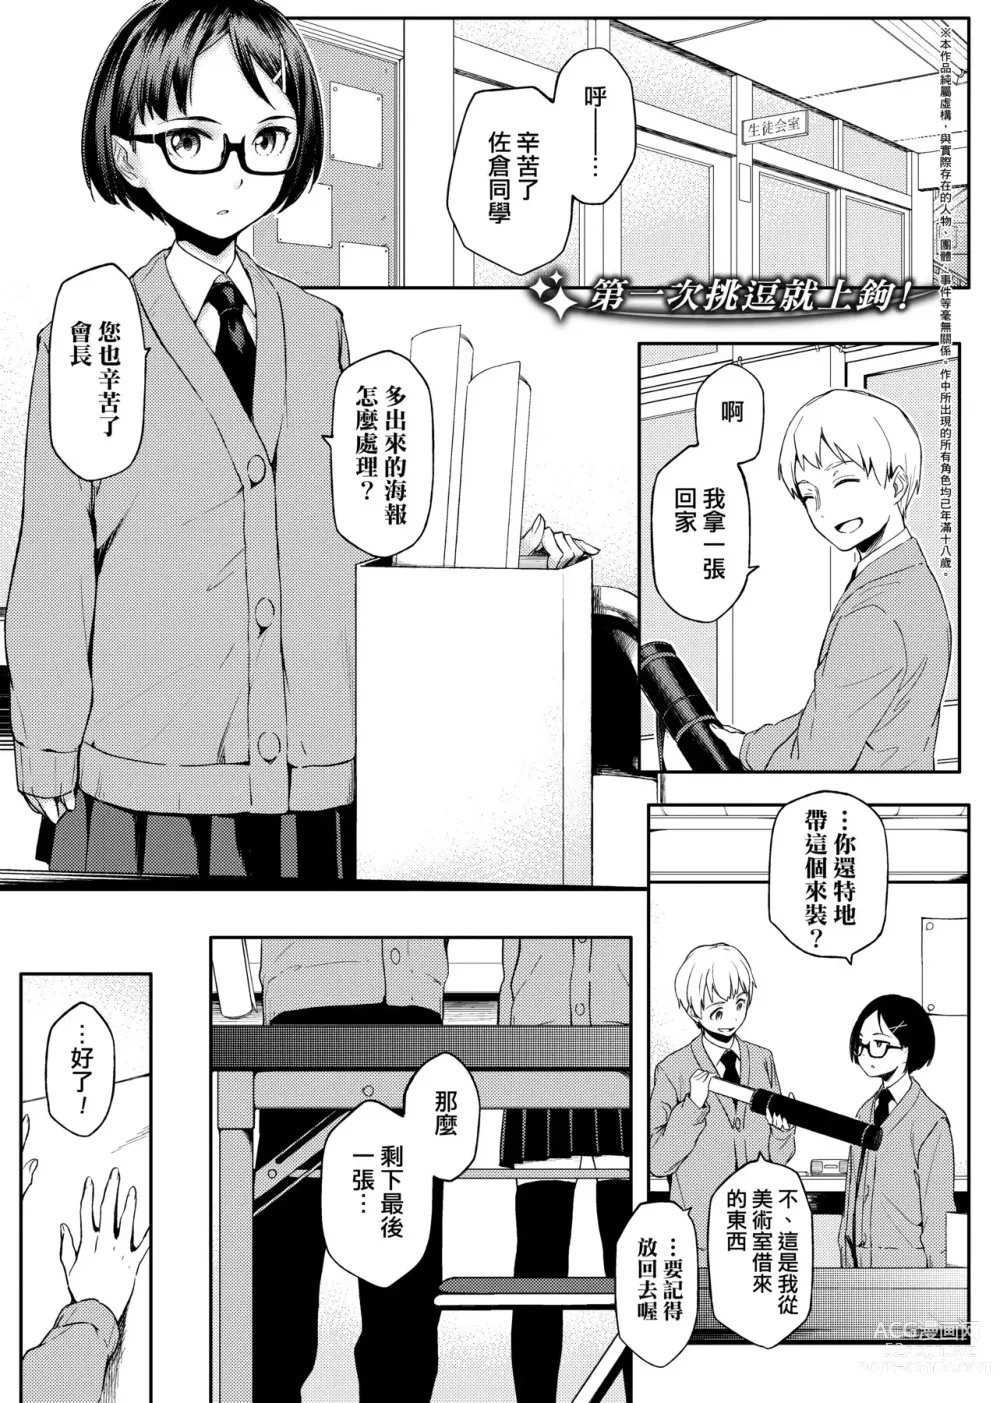 Page 214 of manga Natsu Koi Ota Girl - What Brings You to Japan?